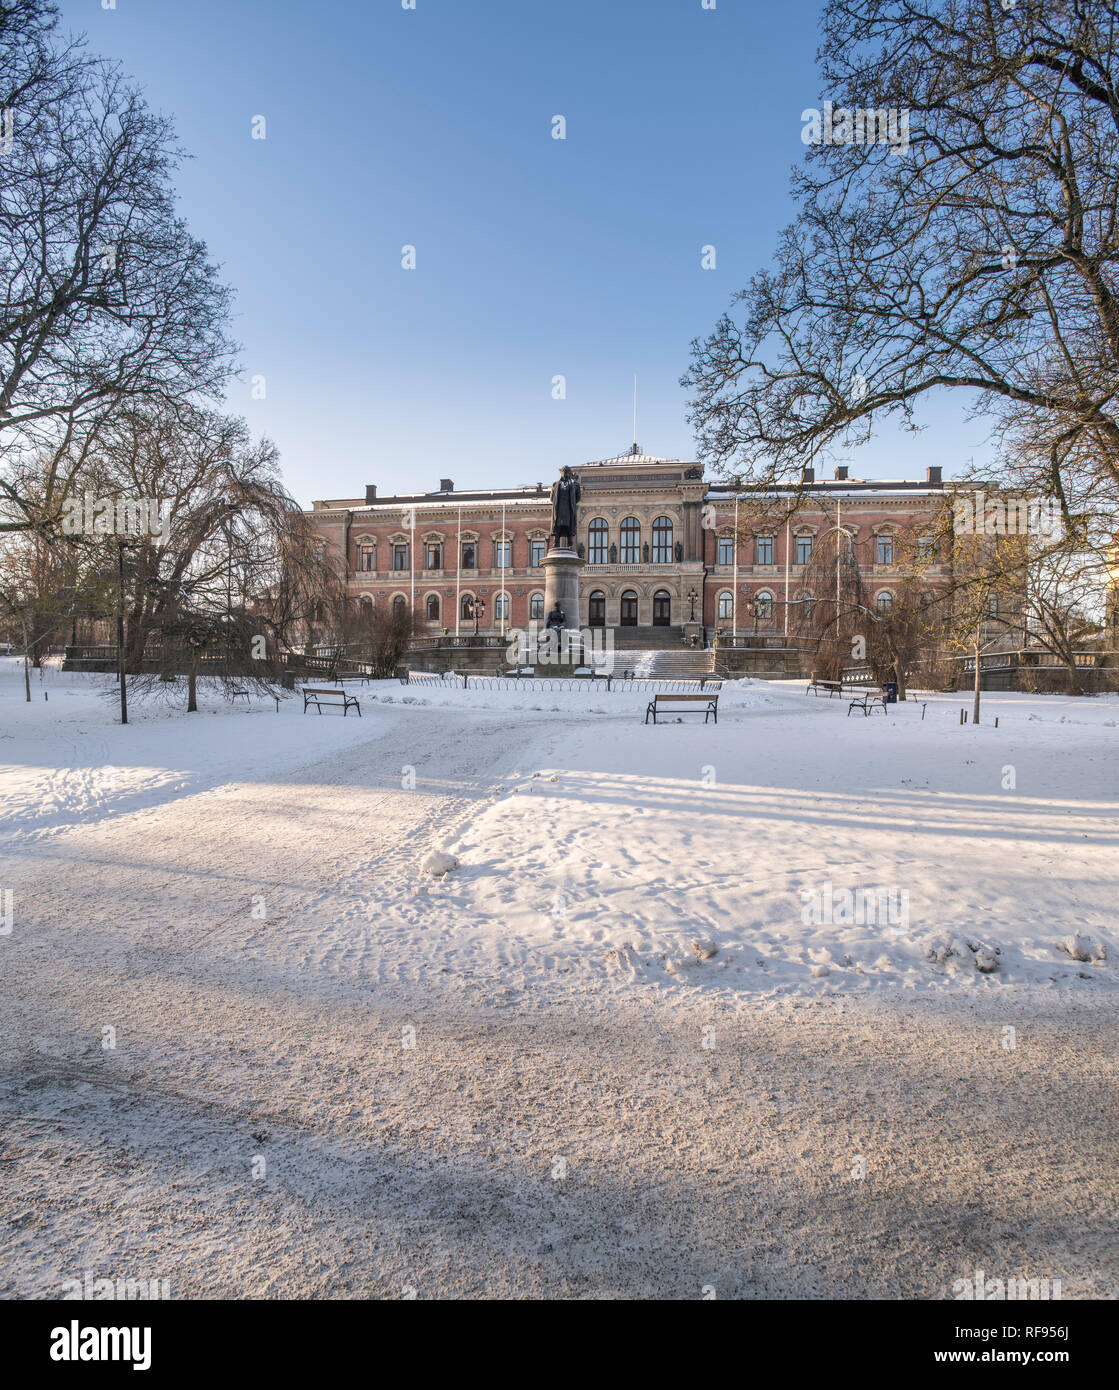 Università di Uppsala sala dal Parco di università di Uppsala, Scandinavia Foto Stock